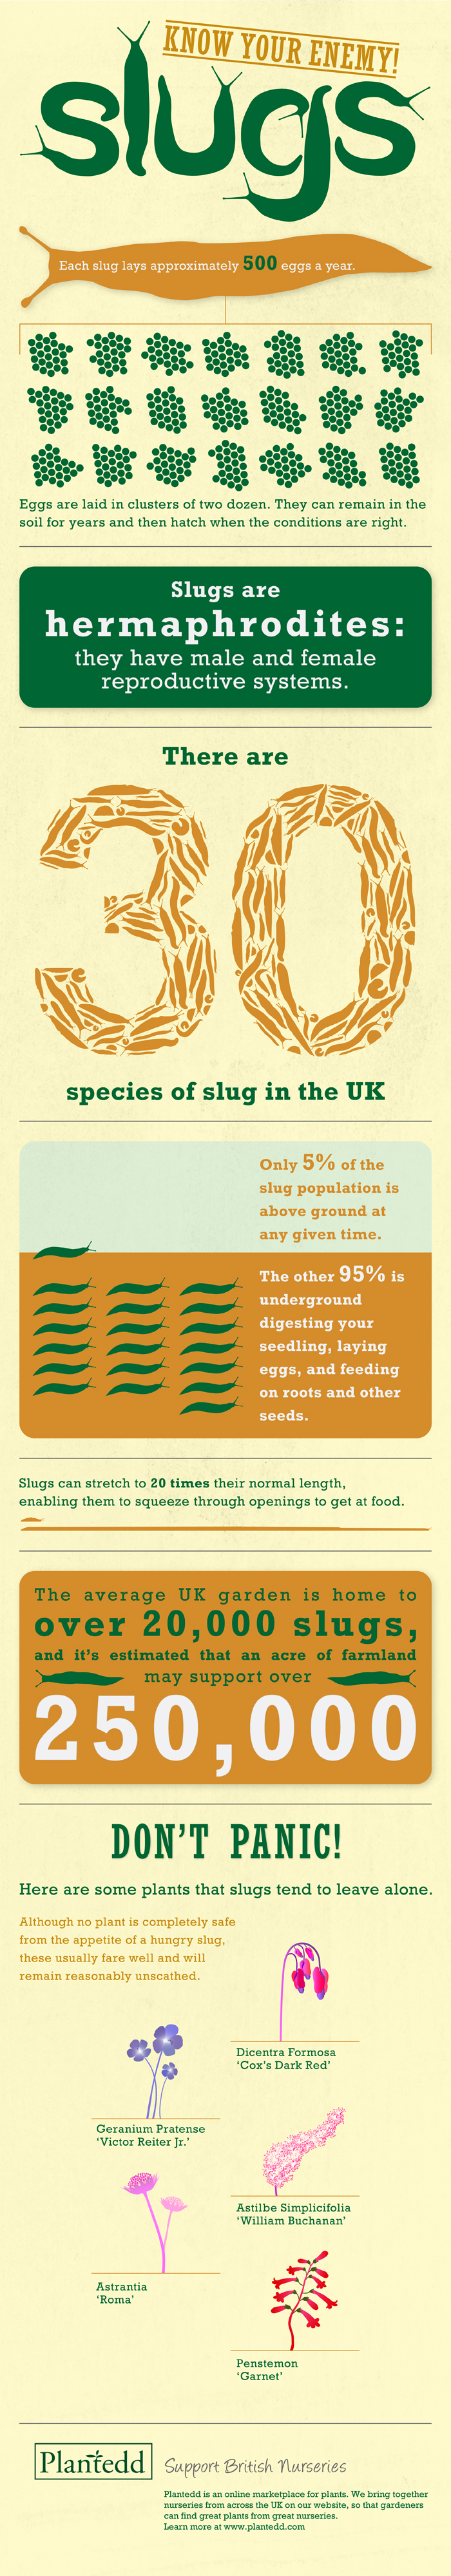 Slugs: Know Your Enemy